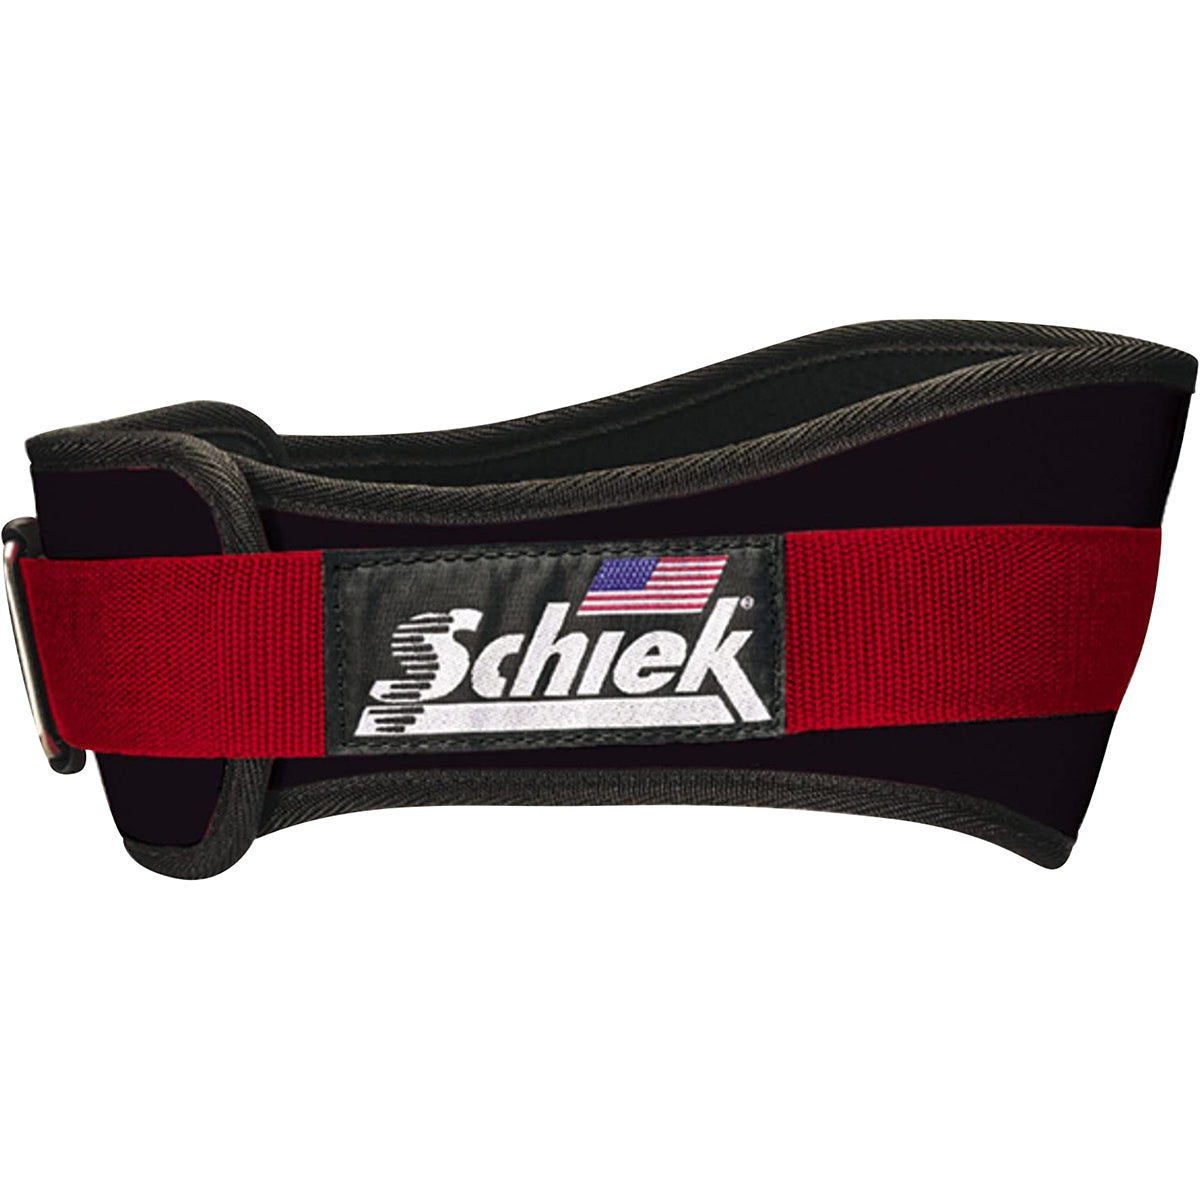 Schiek Sports Model 3004 Power Lifting Belt - Red Schiek Sports